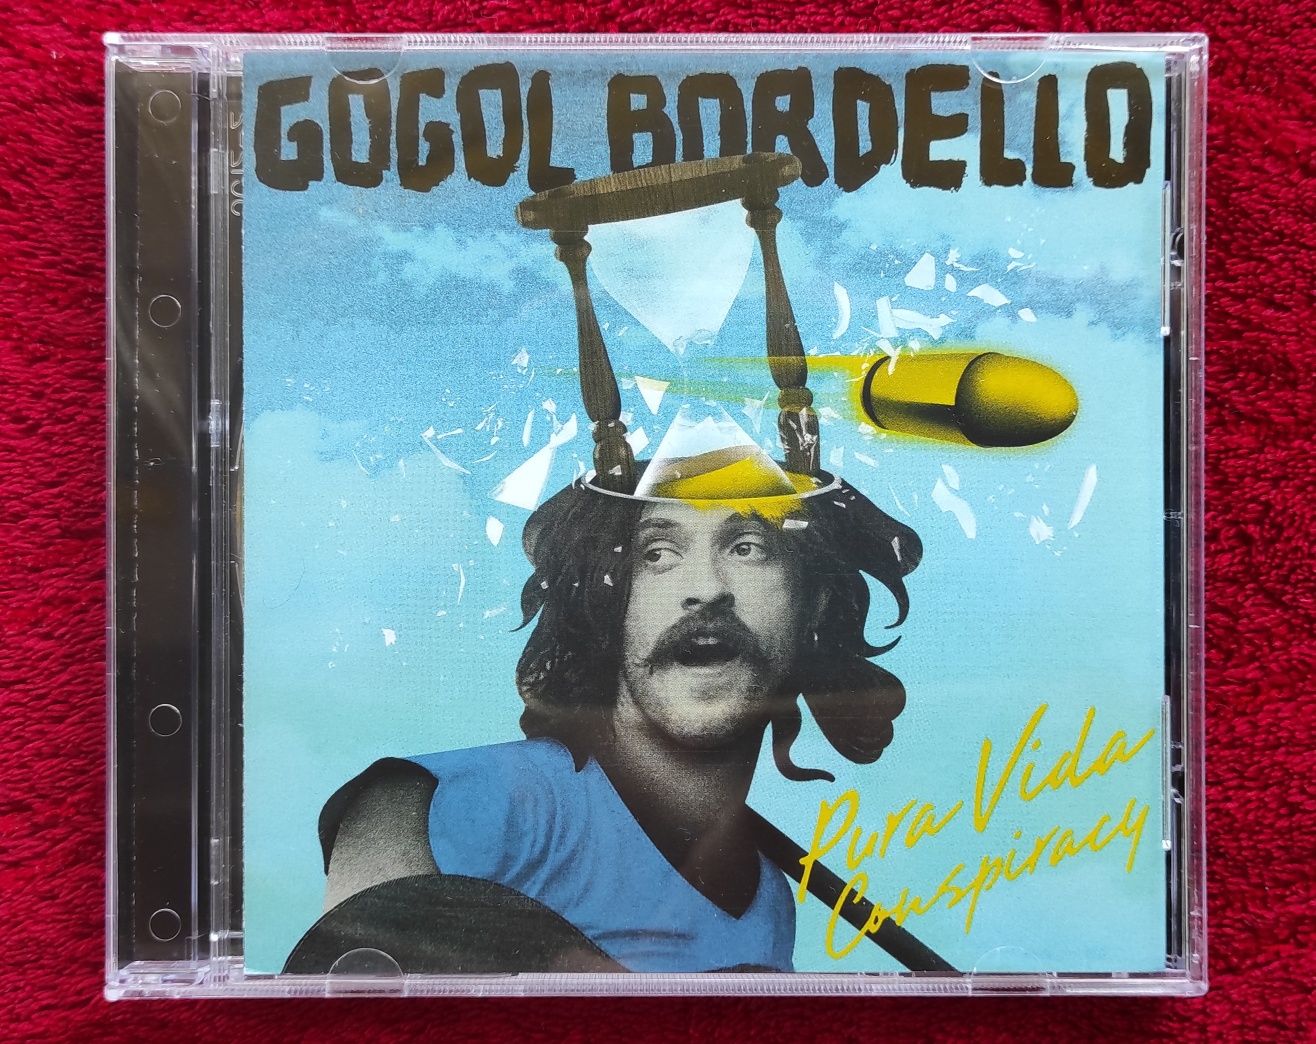 Gogol Bordello. Новый CD диск. Цыганский панк-рок